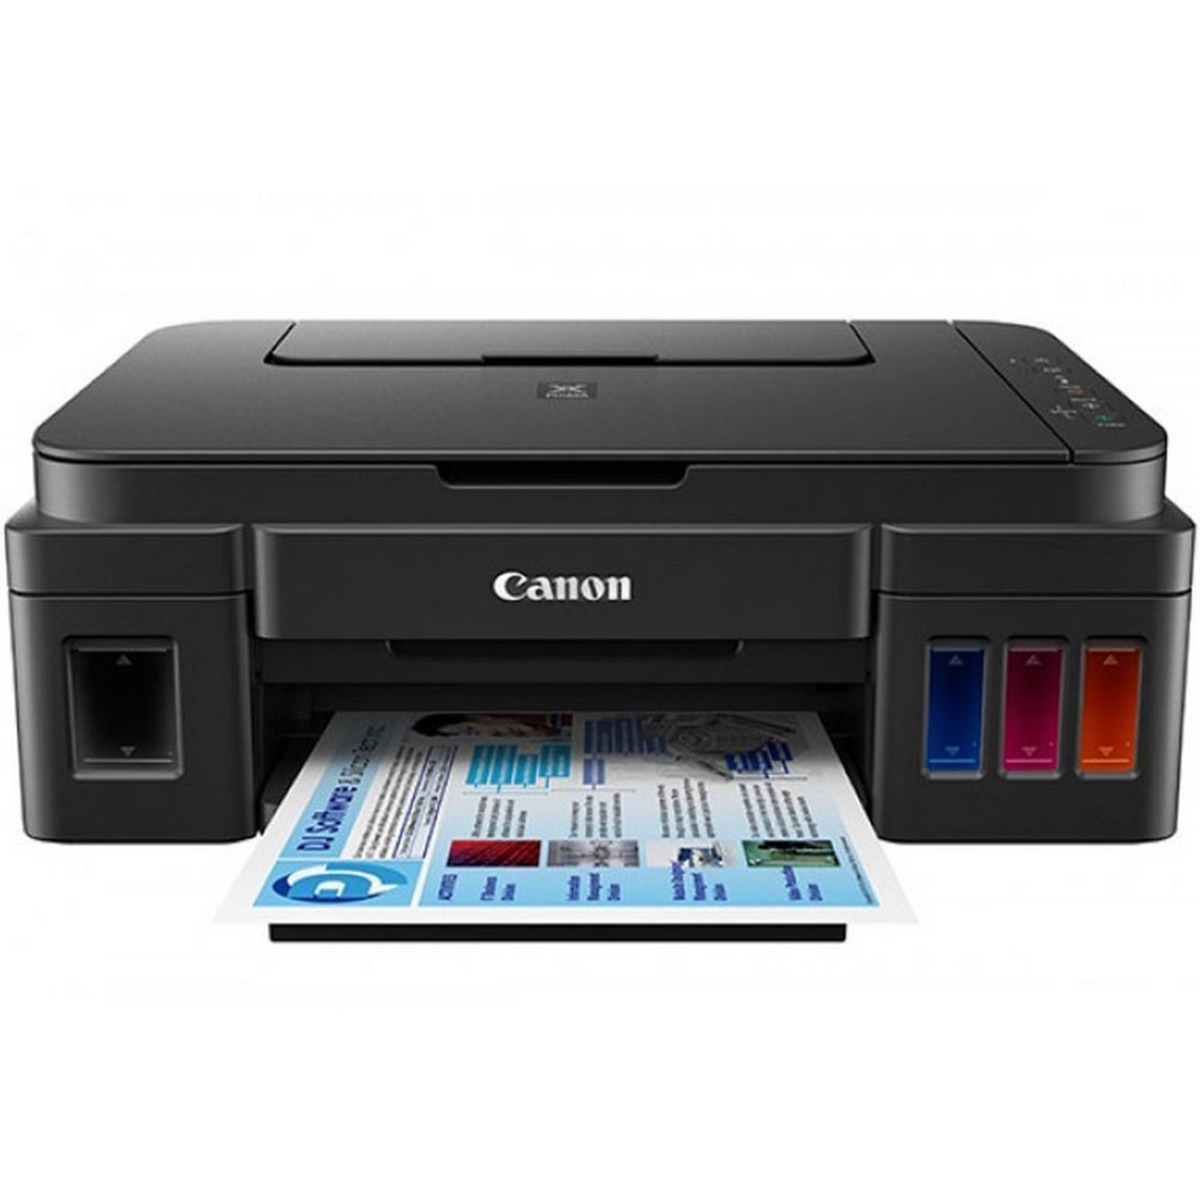 Canon Inkjet All in One Wireless Printer G3000